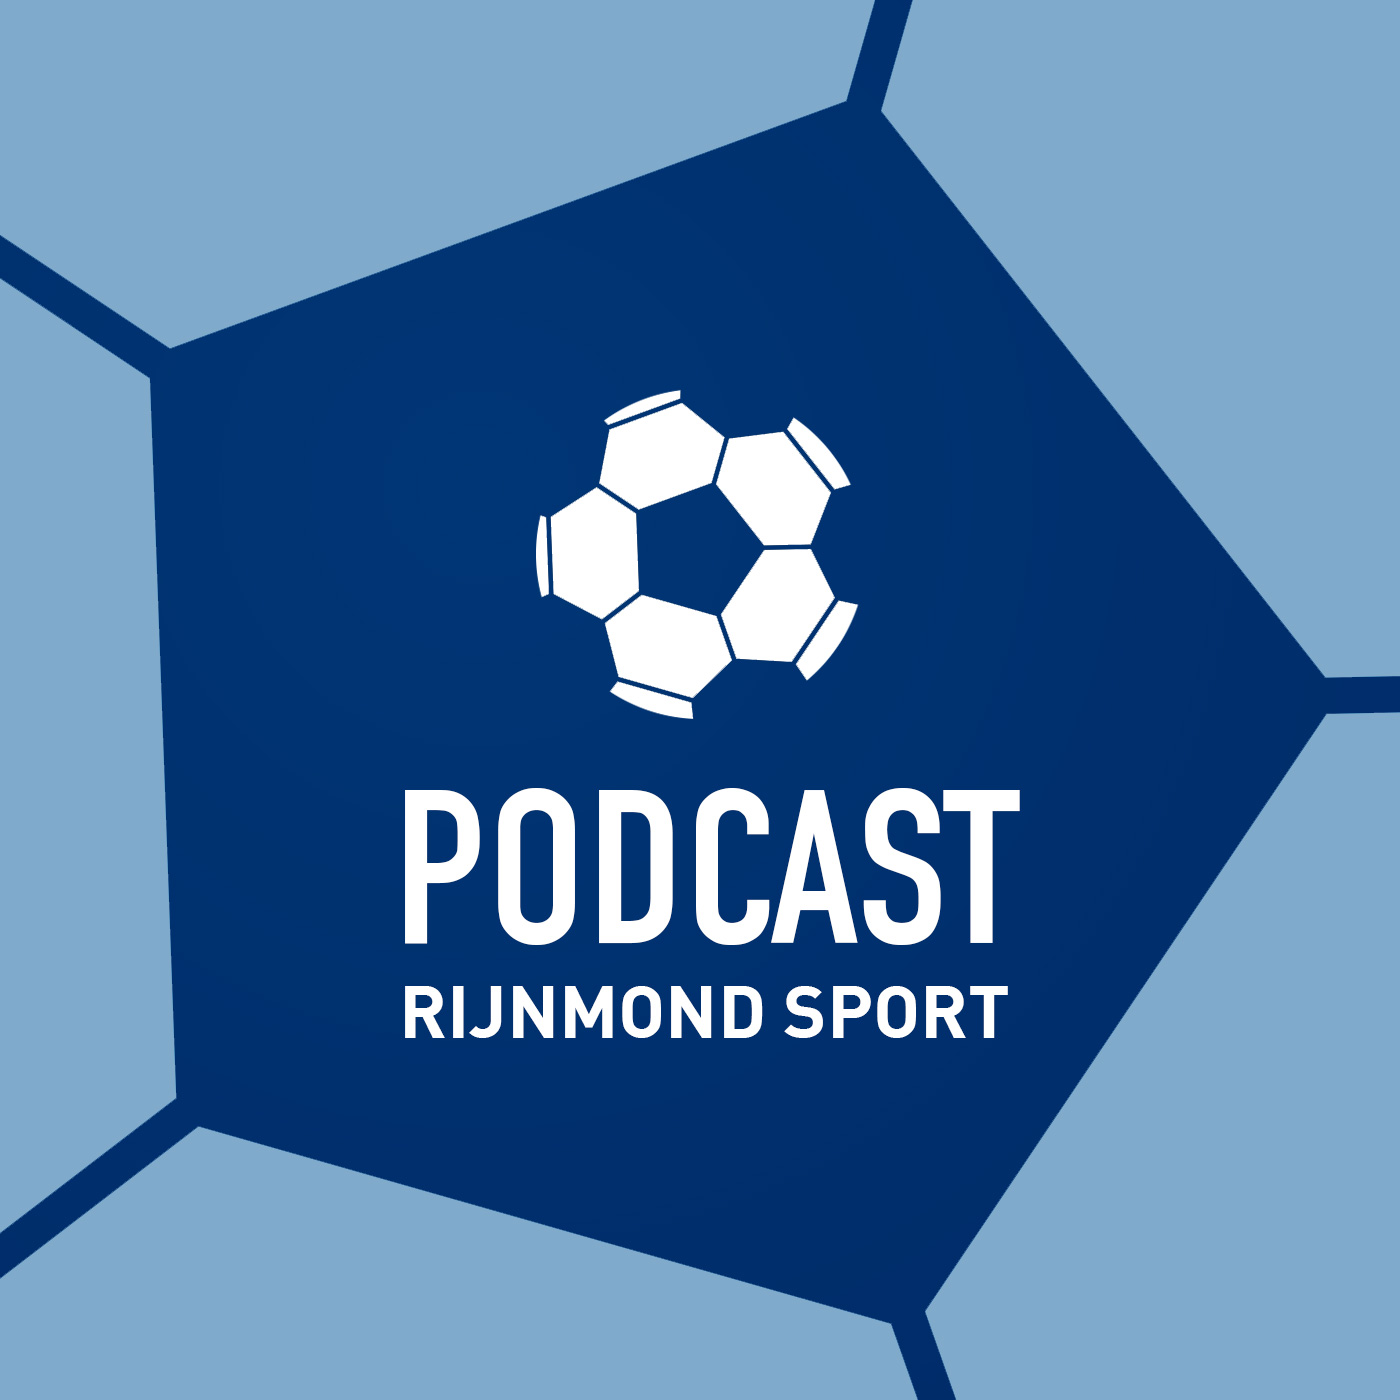 Rijnmond Sport logo